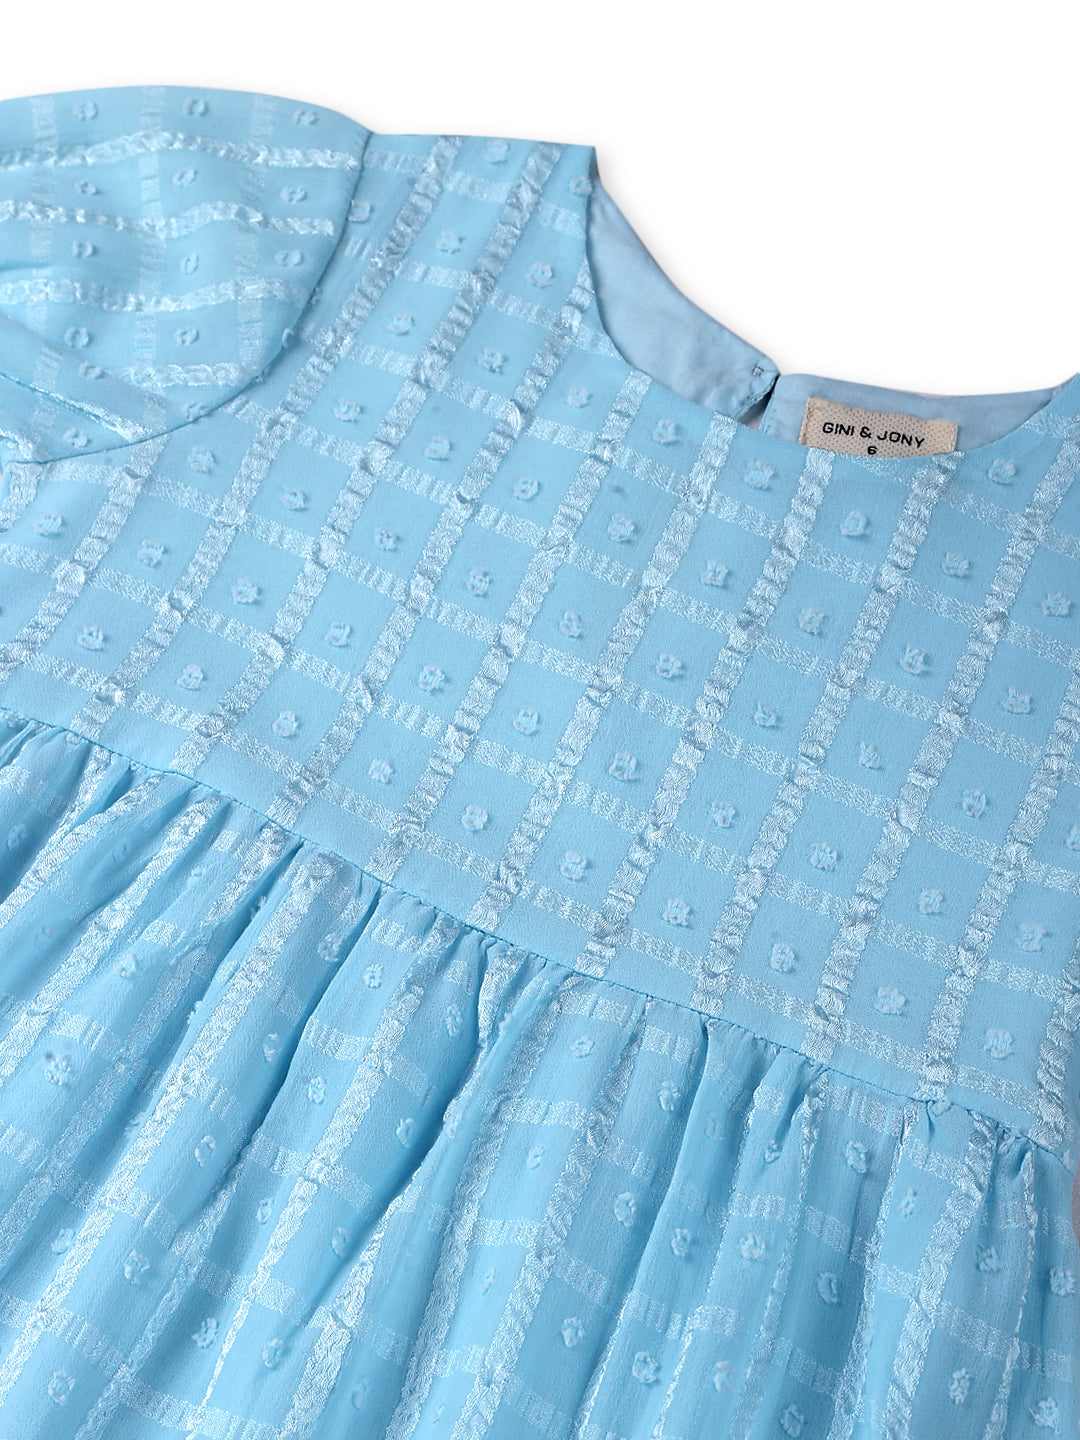 Girls Blue Cotton Solid Dress